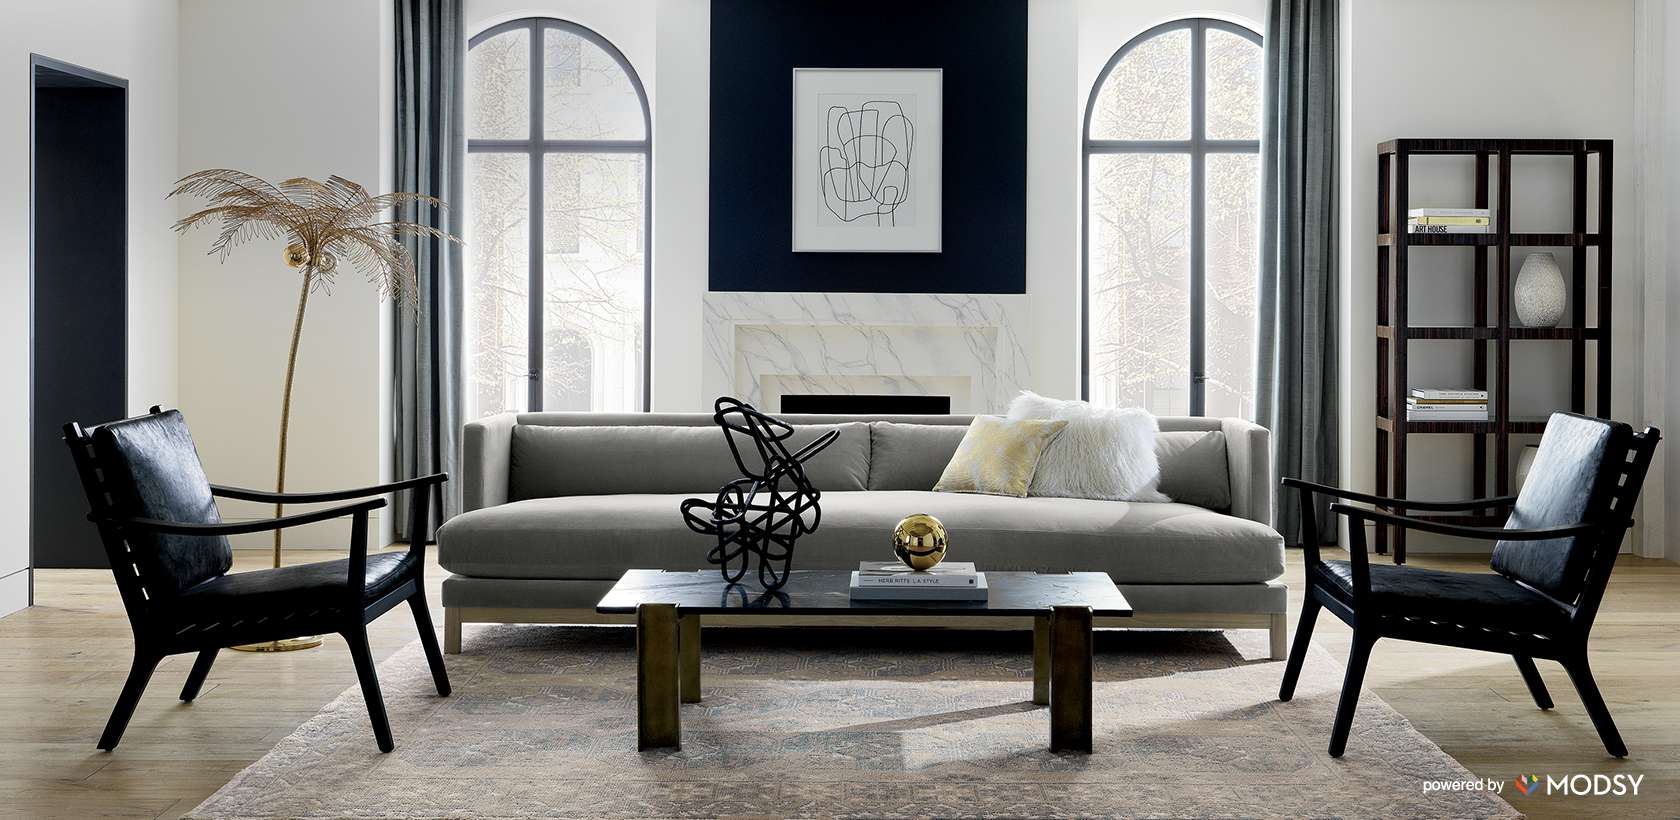 Unique Furniture Modern Edgy CB2